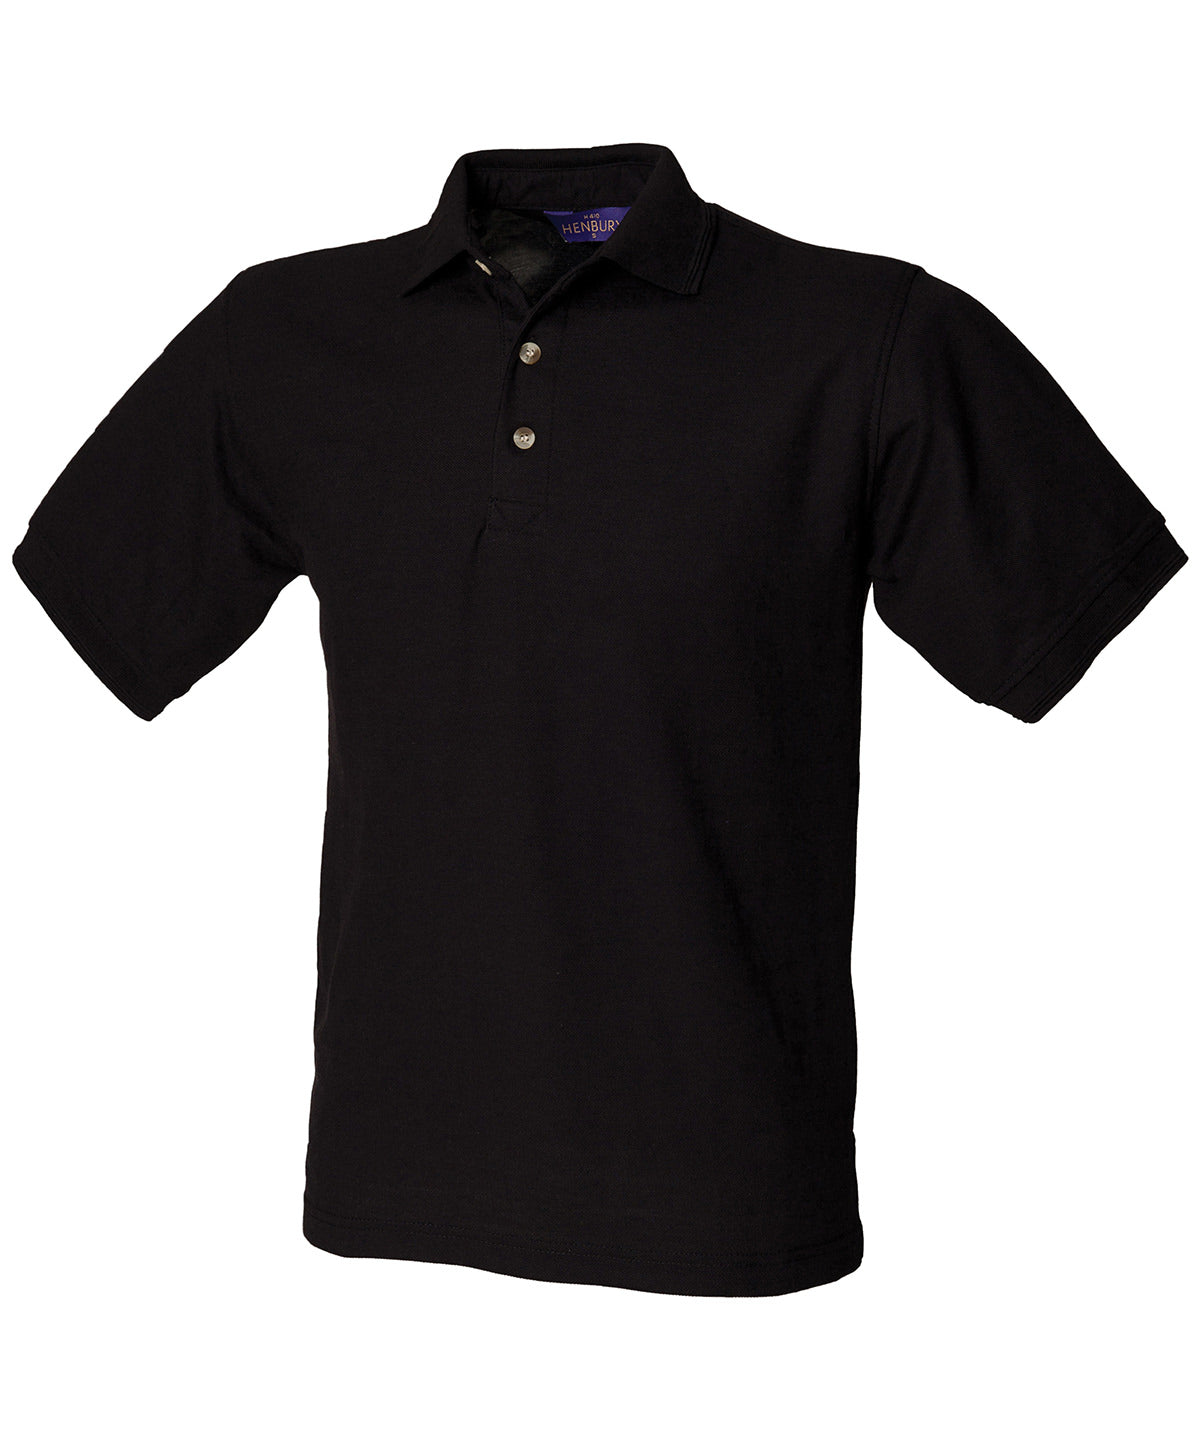 Personalised Polo Shirts - Black Henbury Ultimate 65/35 polo shirt